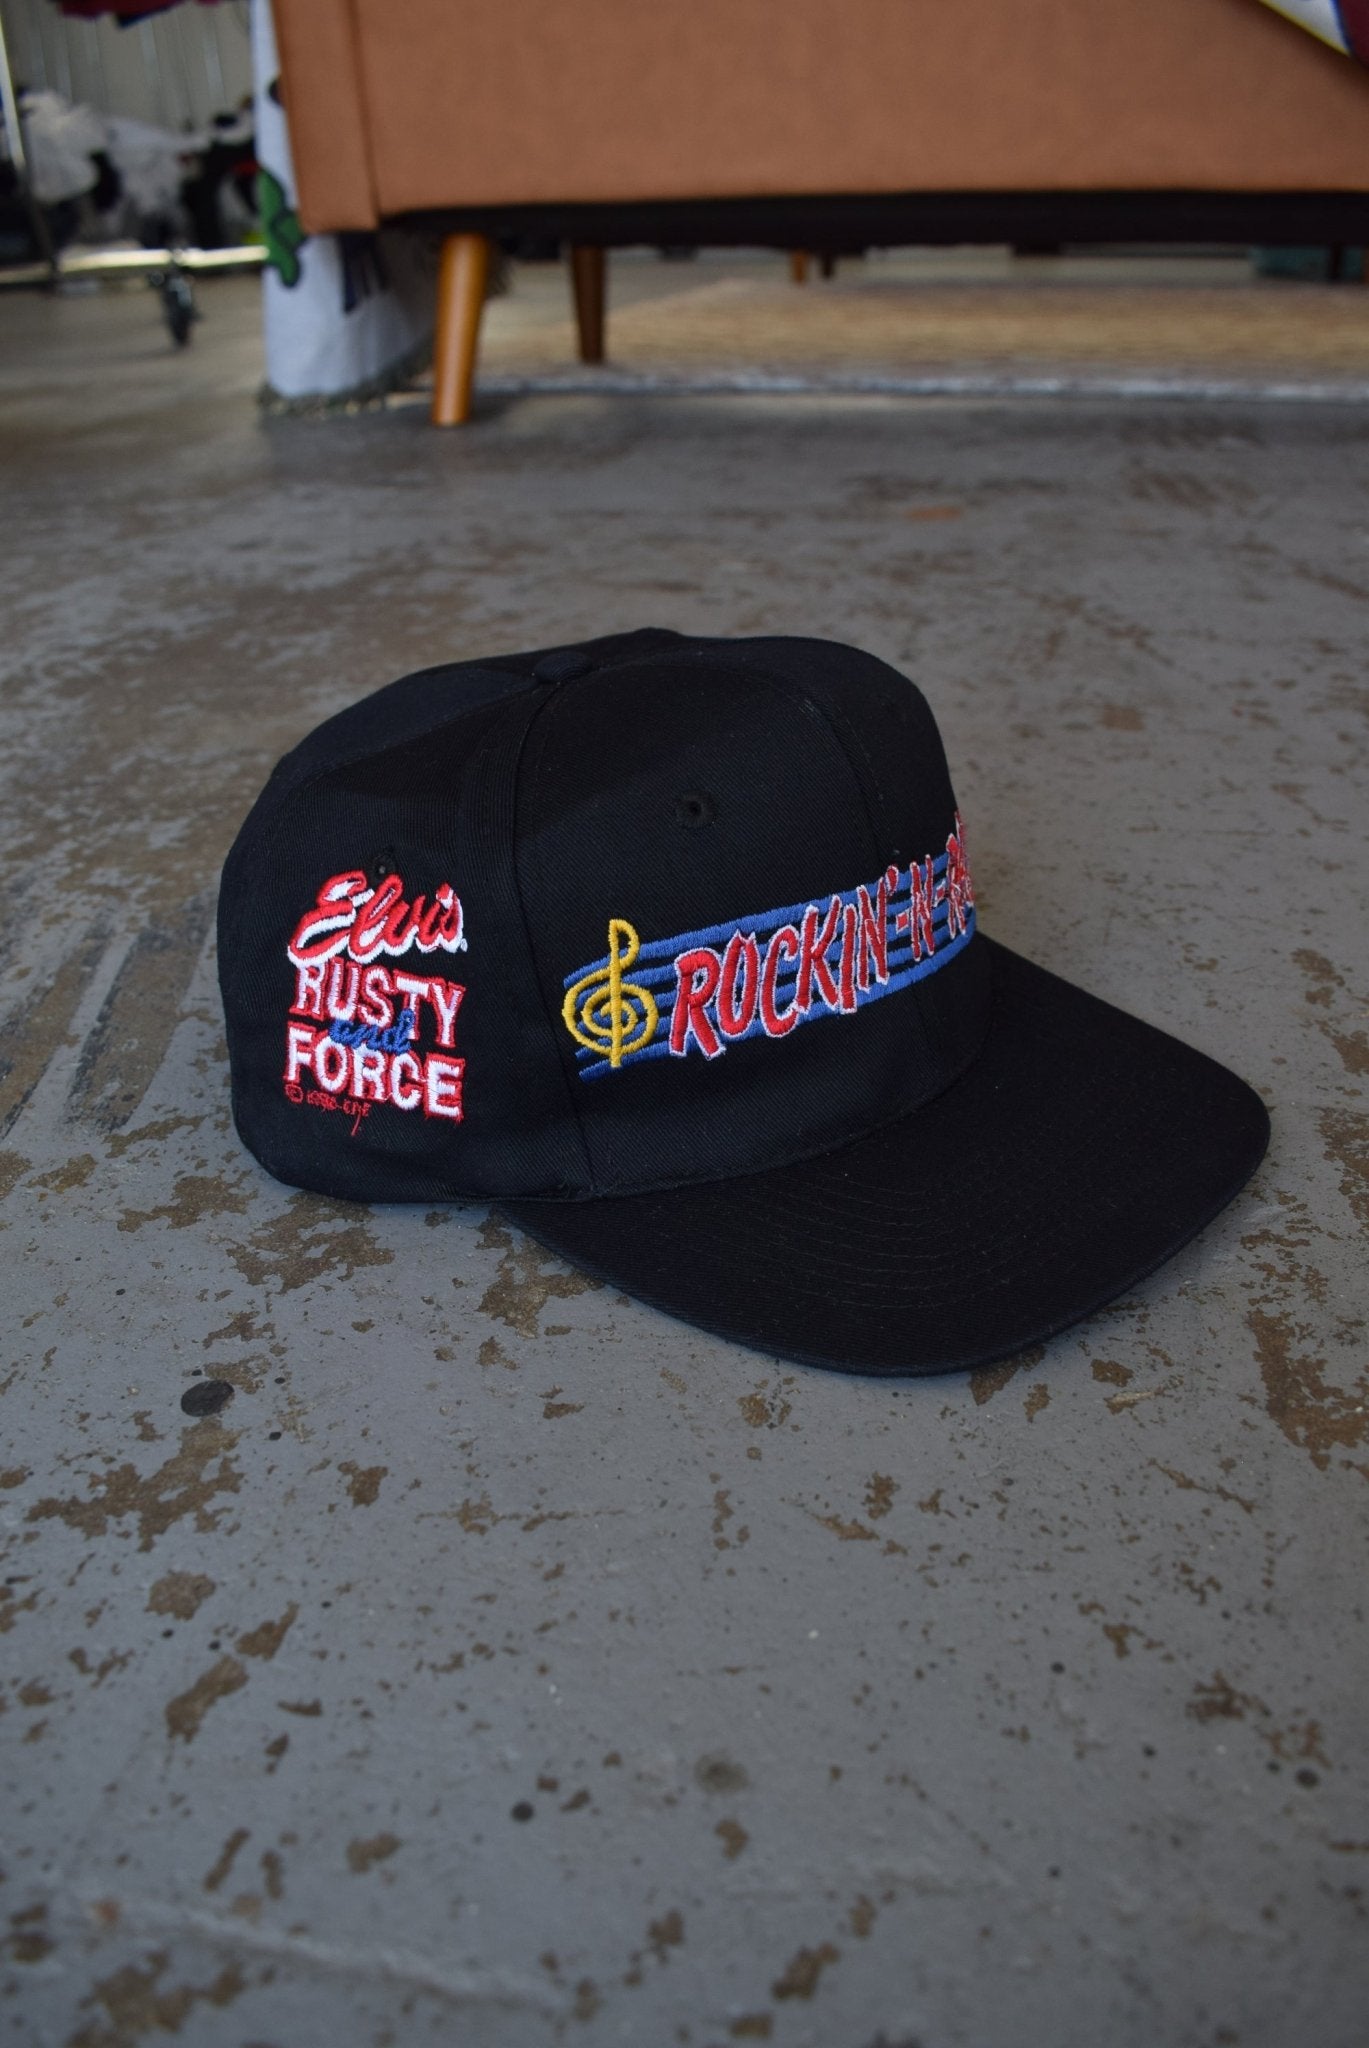 Vintage 1998 NASCAR Rockin' N Racin' Hat - Retrospective Store